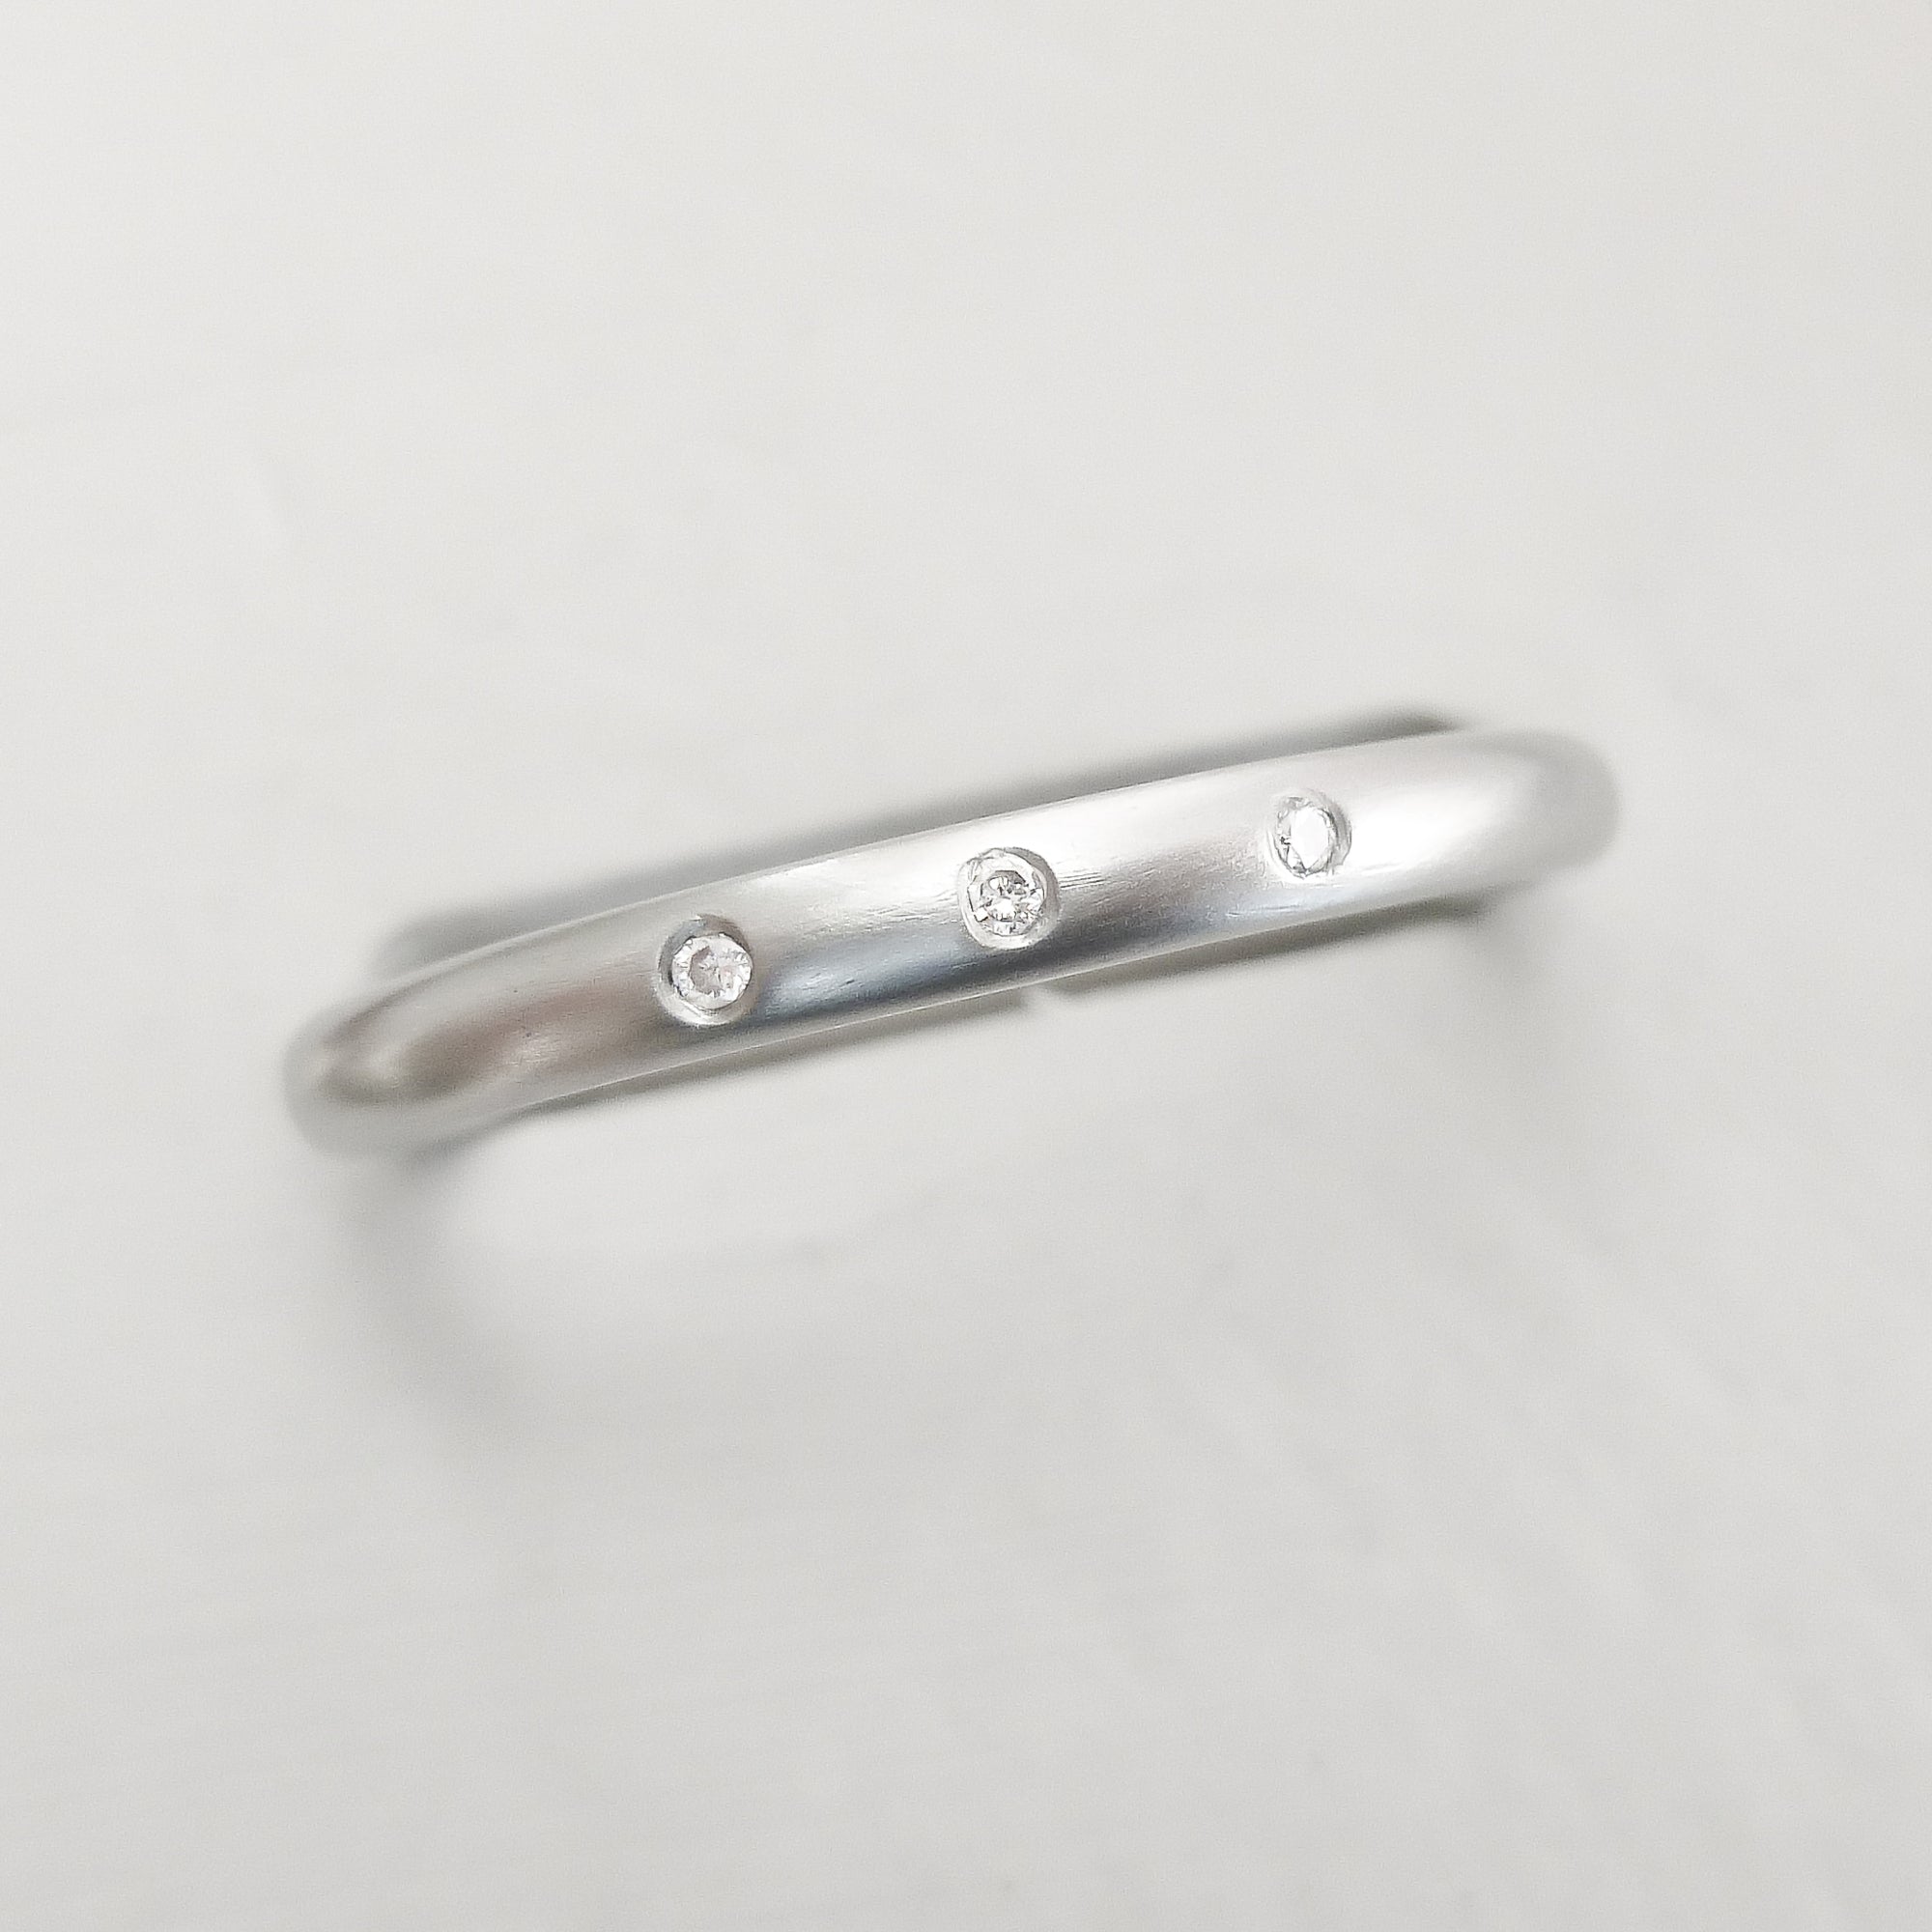 Simple elegant contemporary modern platinum and diamond wedding ring handmade by Sue Lane